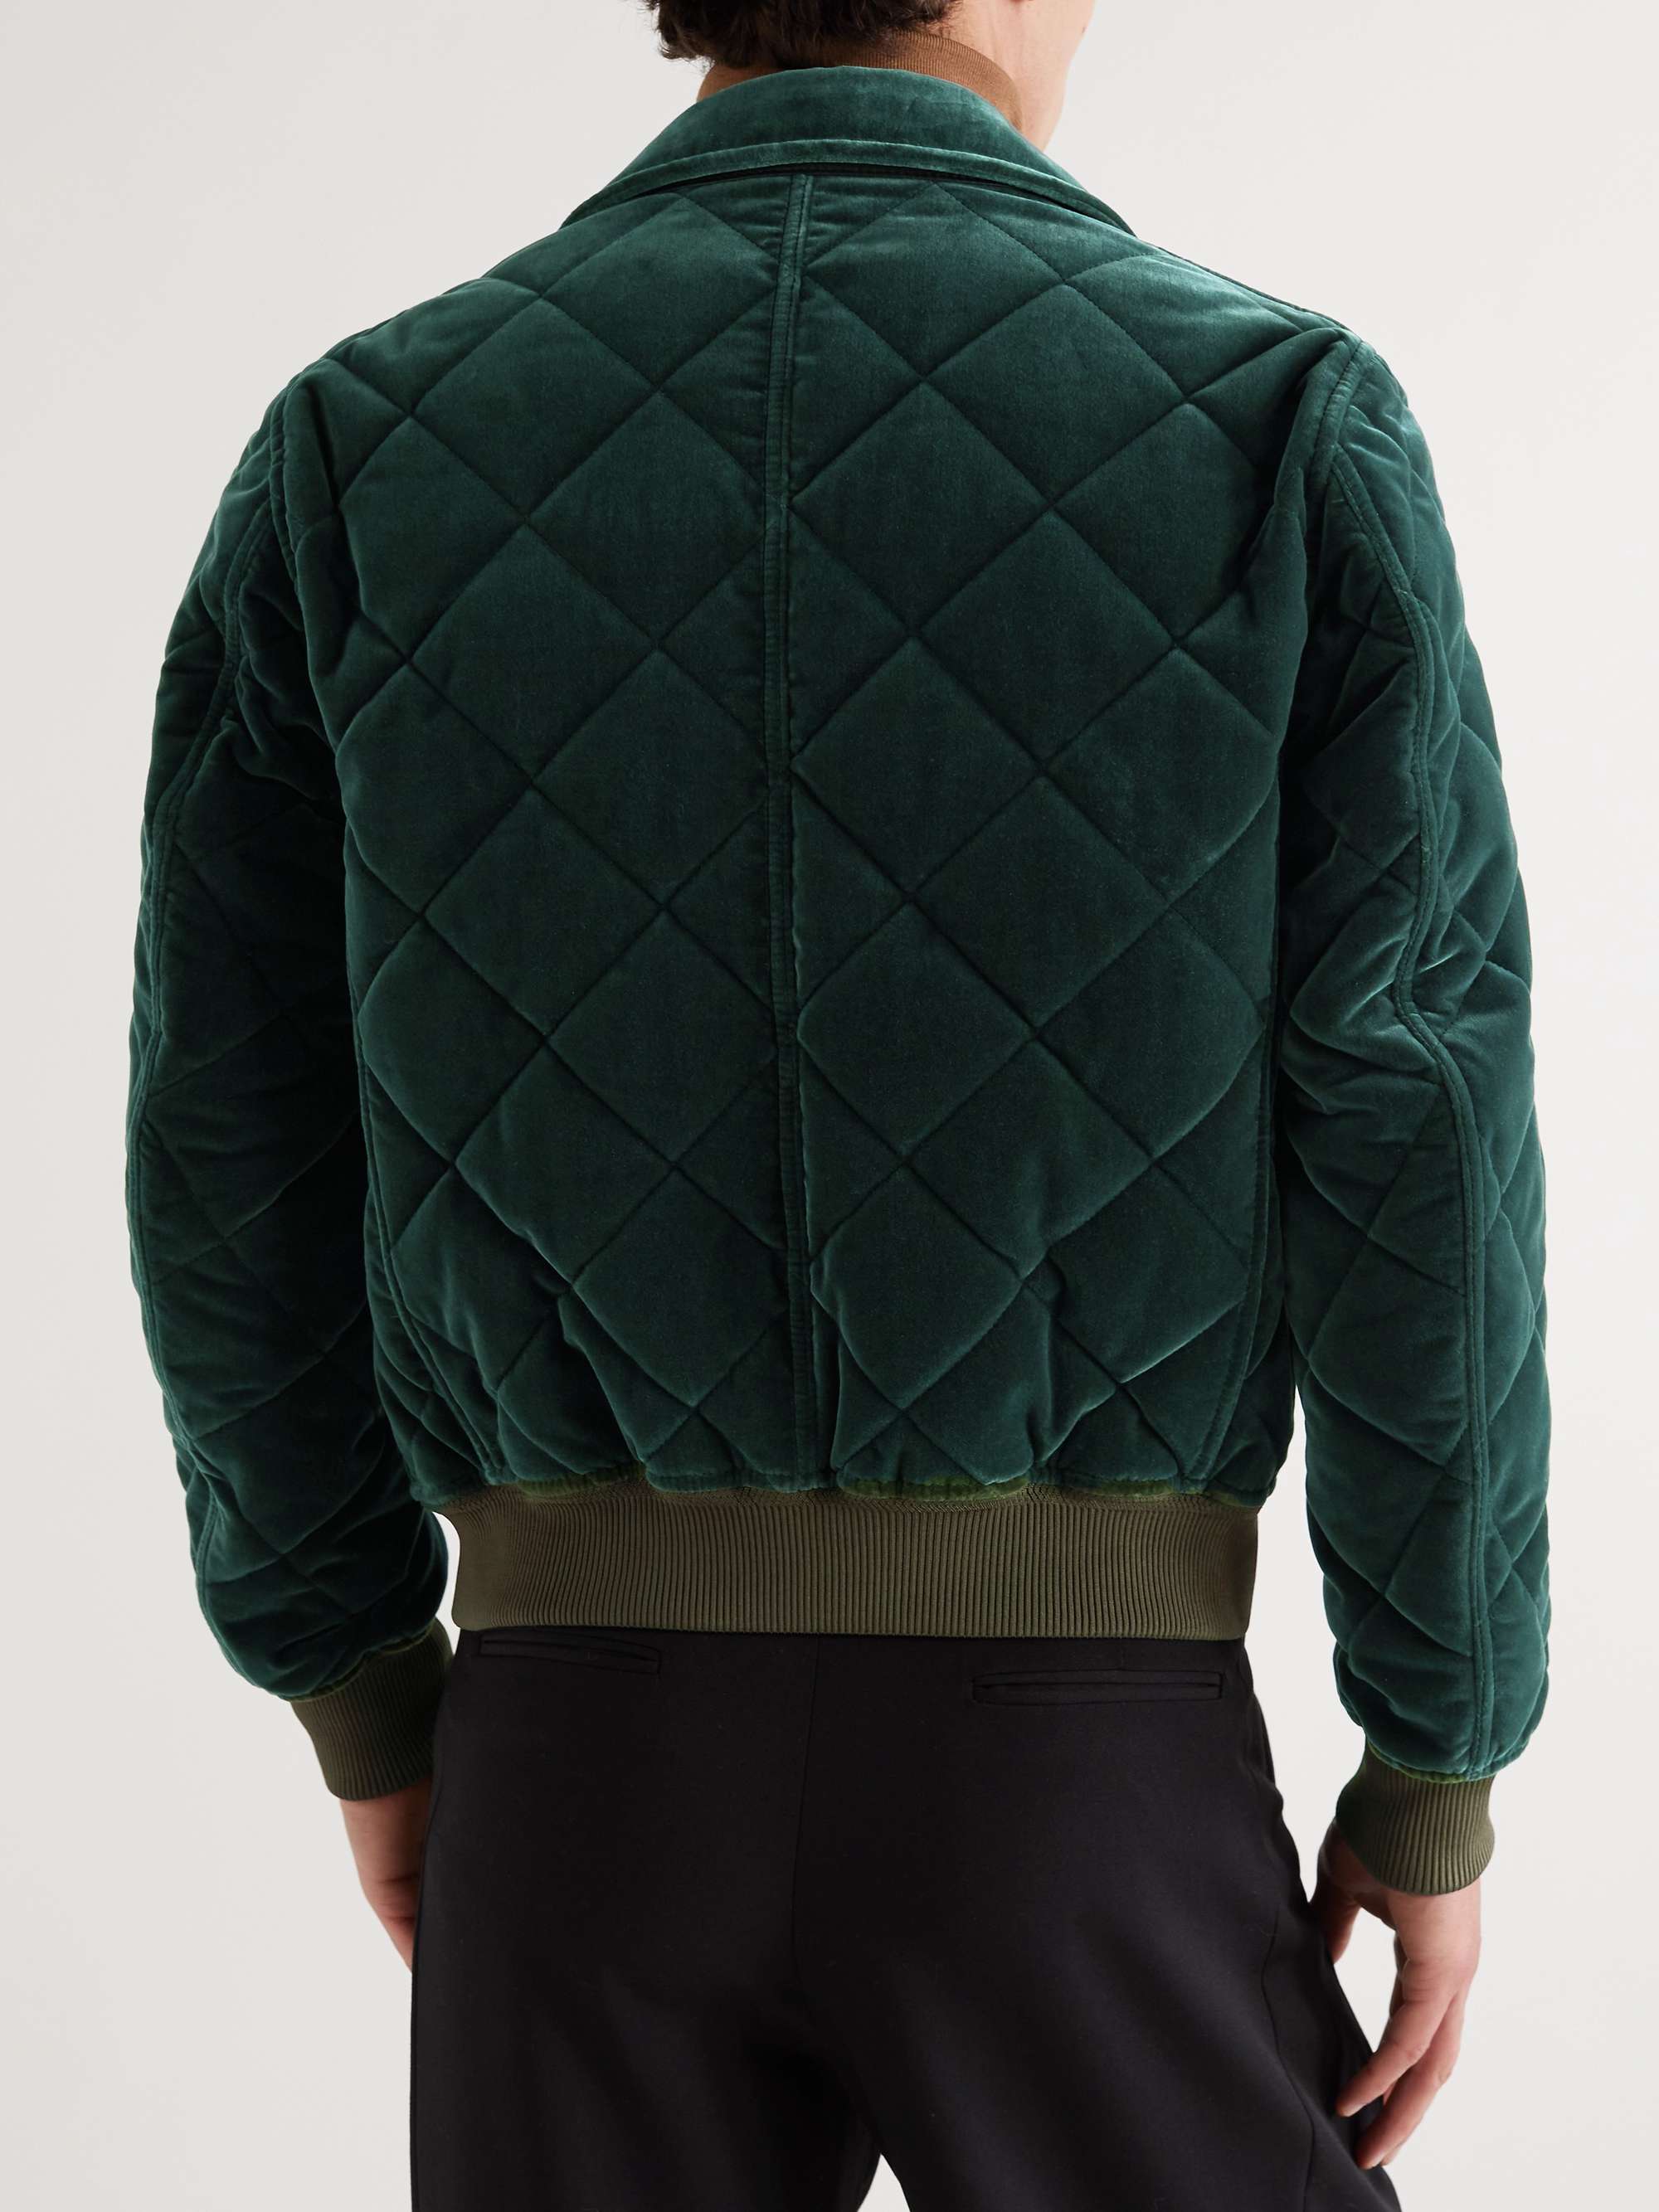 TOM FORD Leather-Trimmed Quilted Cotton-Velvet Blouson Jacket